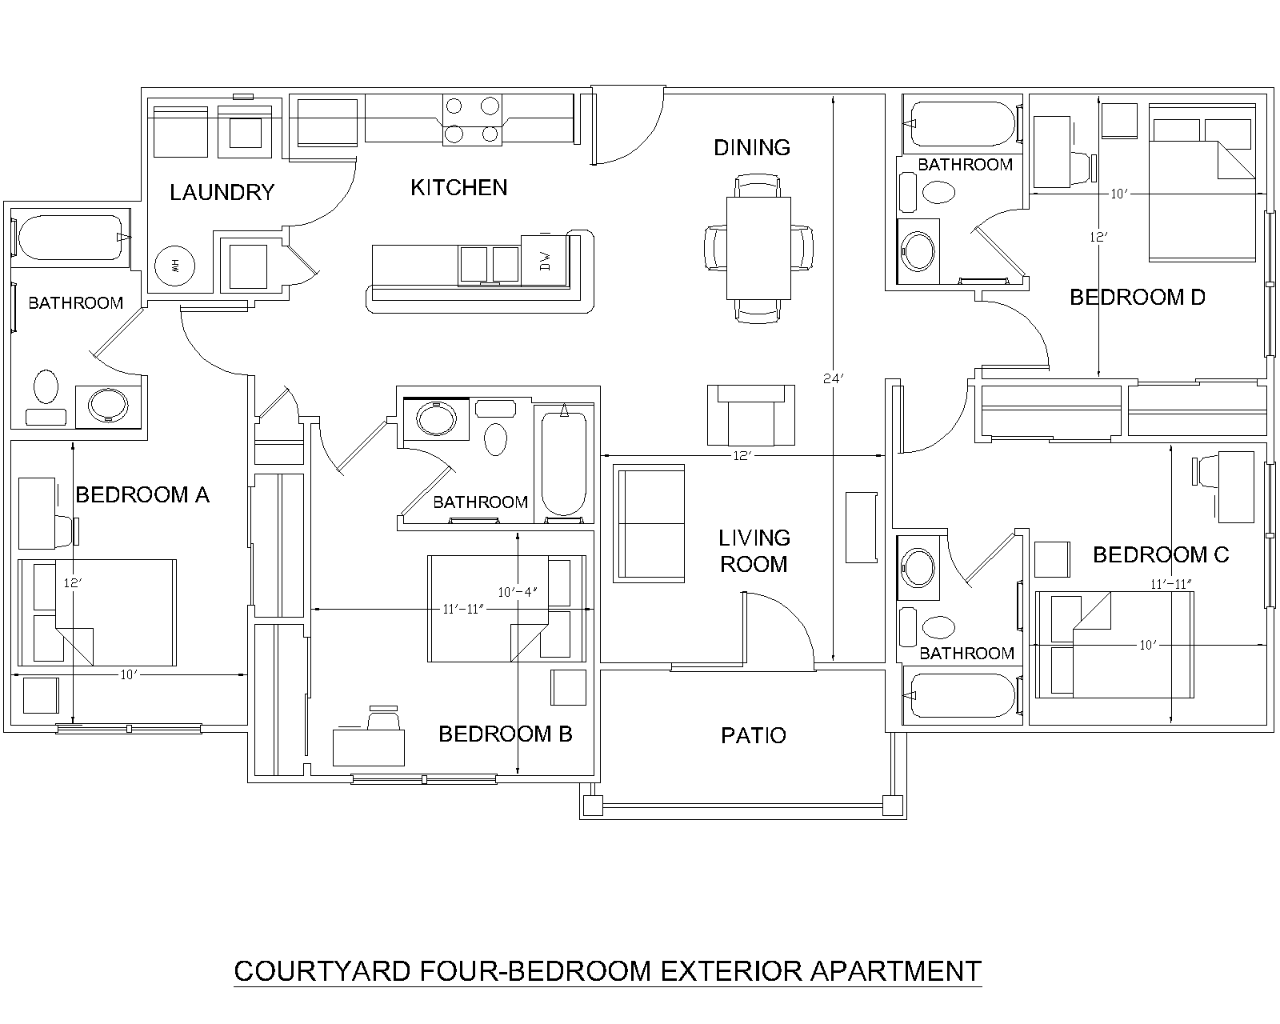 diagram of 4-bedroom/4-bath apartment layout